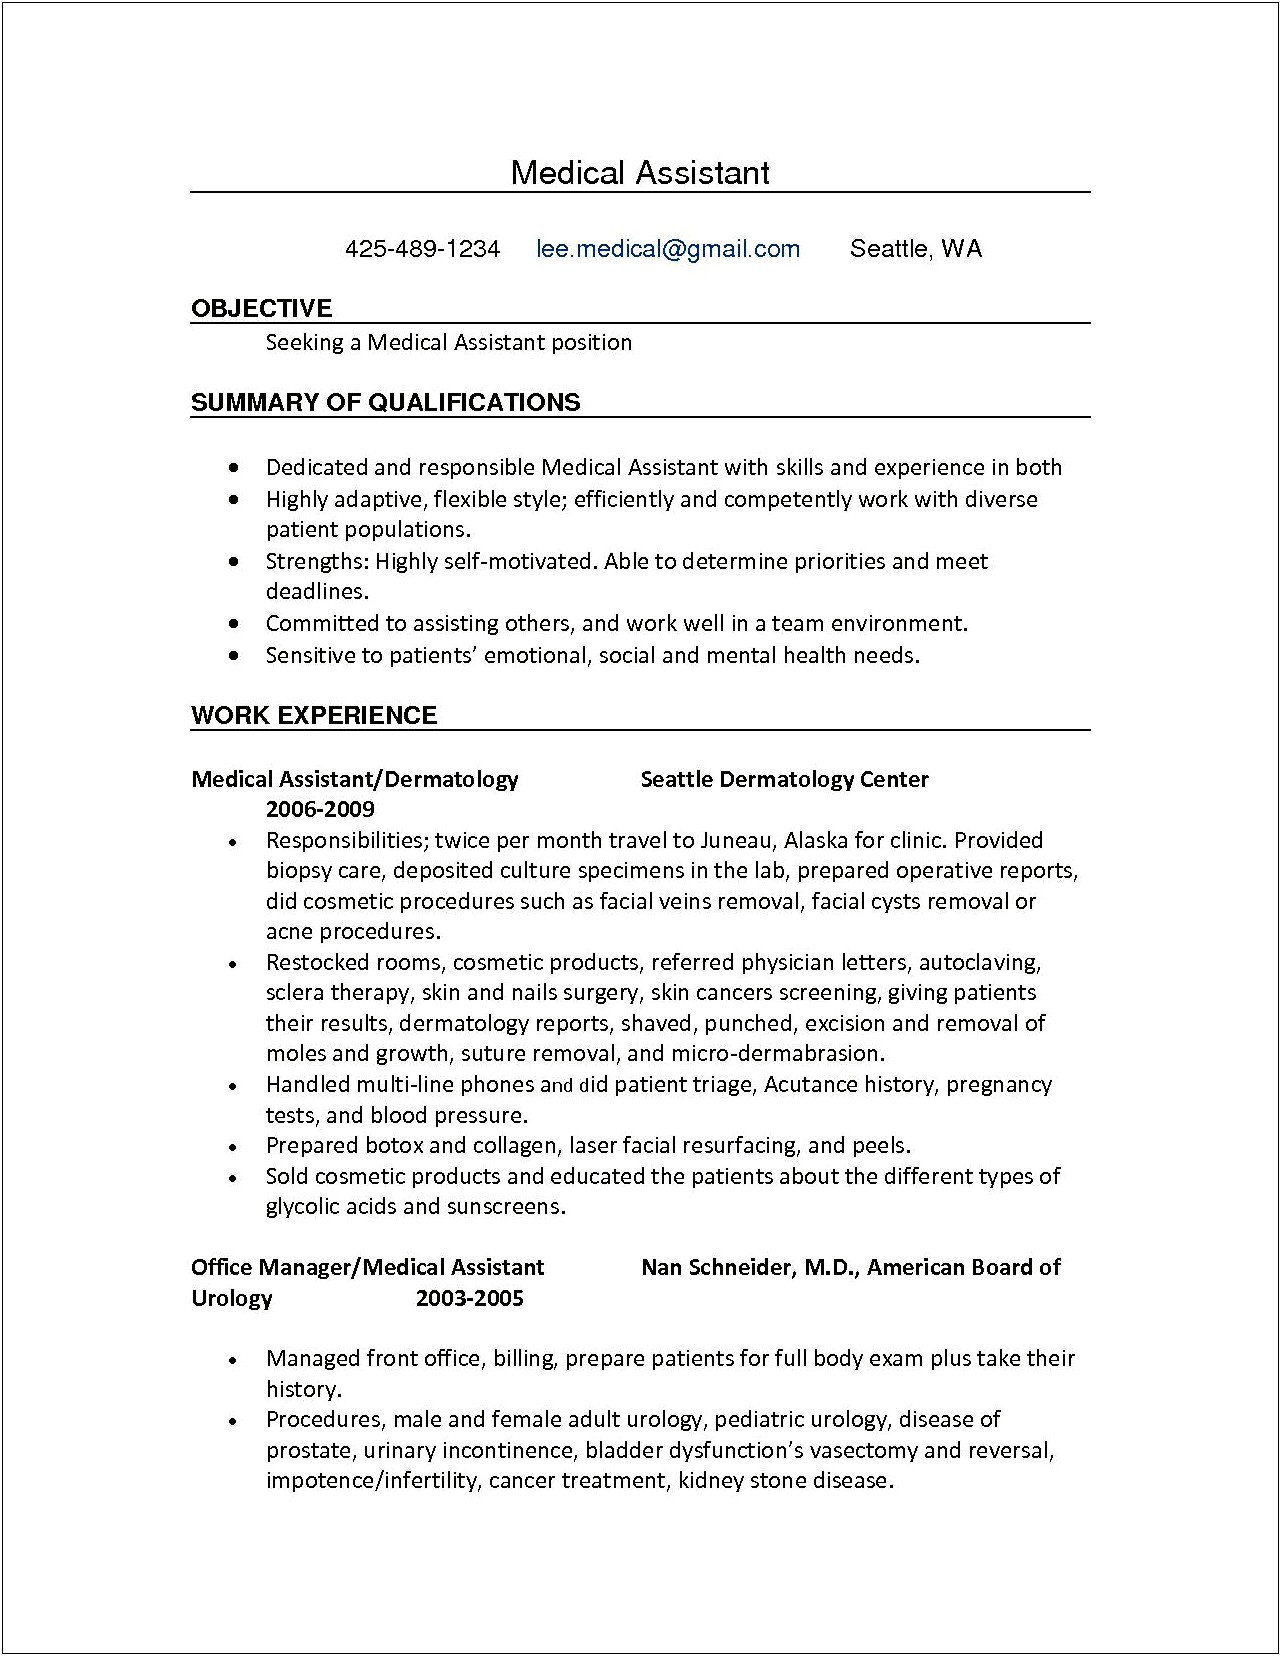 Medical Officer Jobs Descriptions Resume